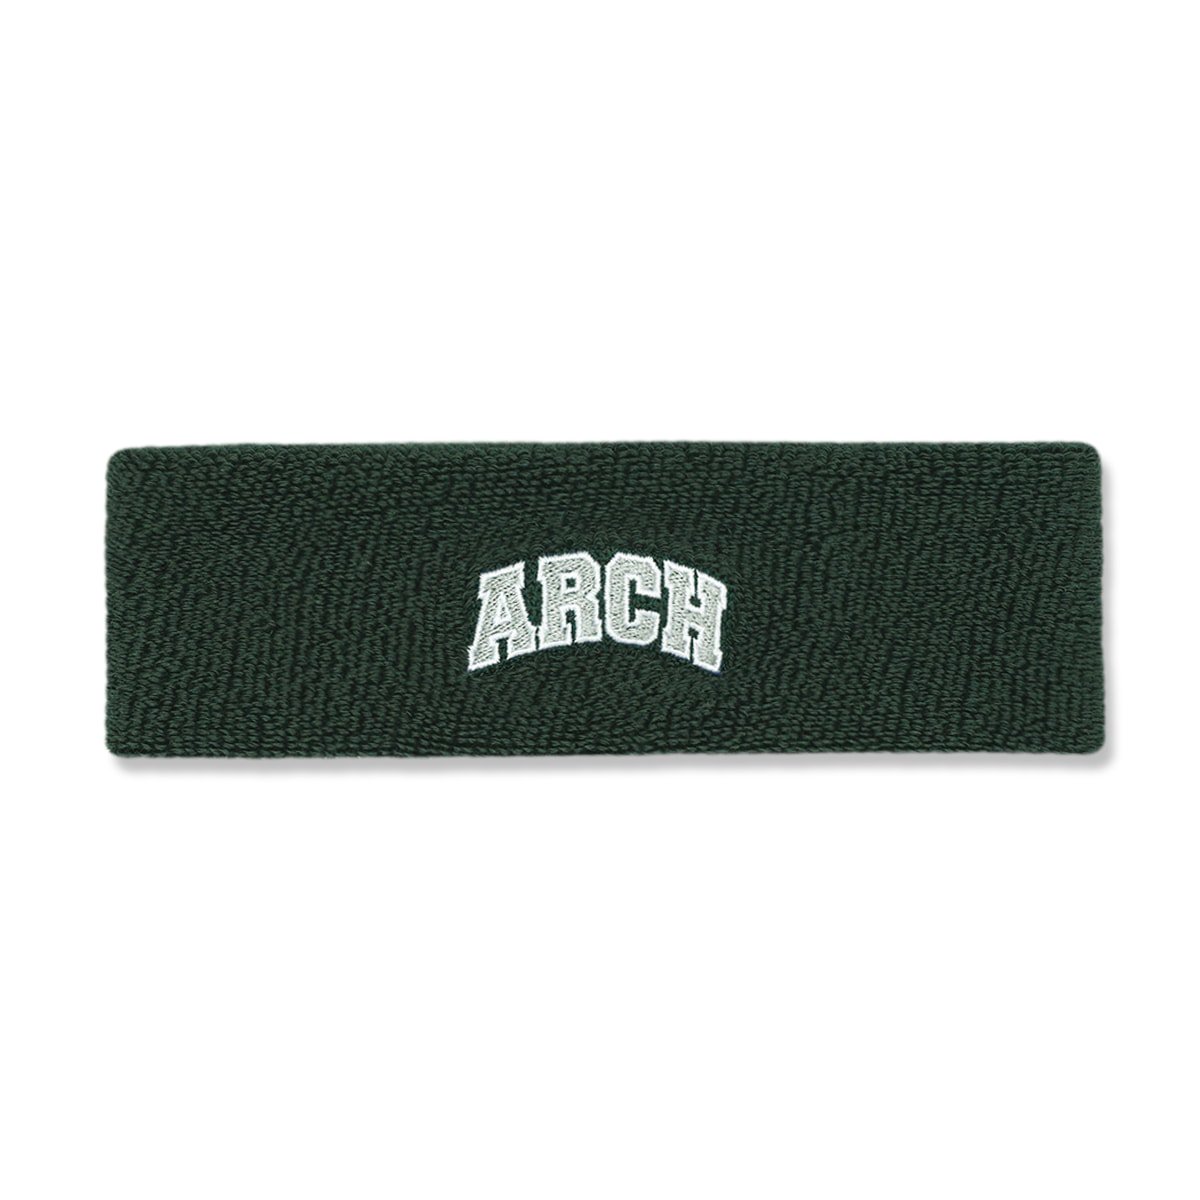 college logo headbanddark green